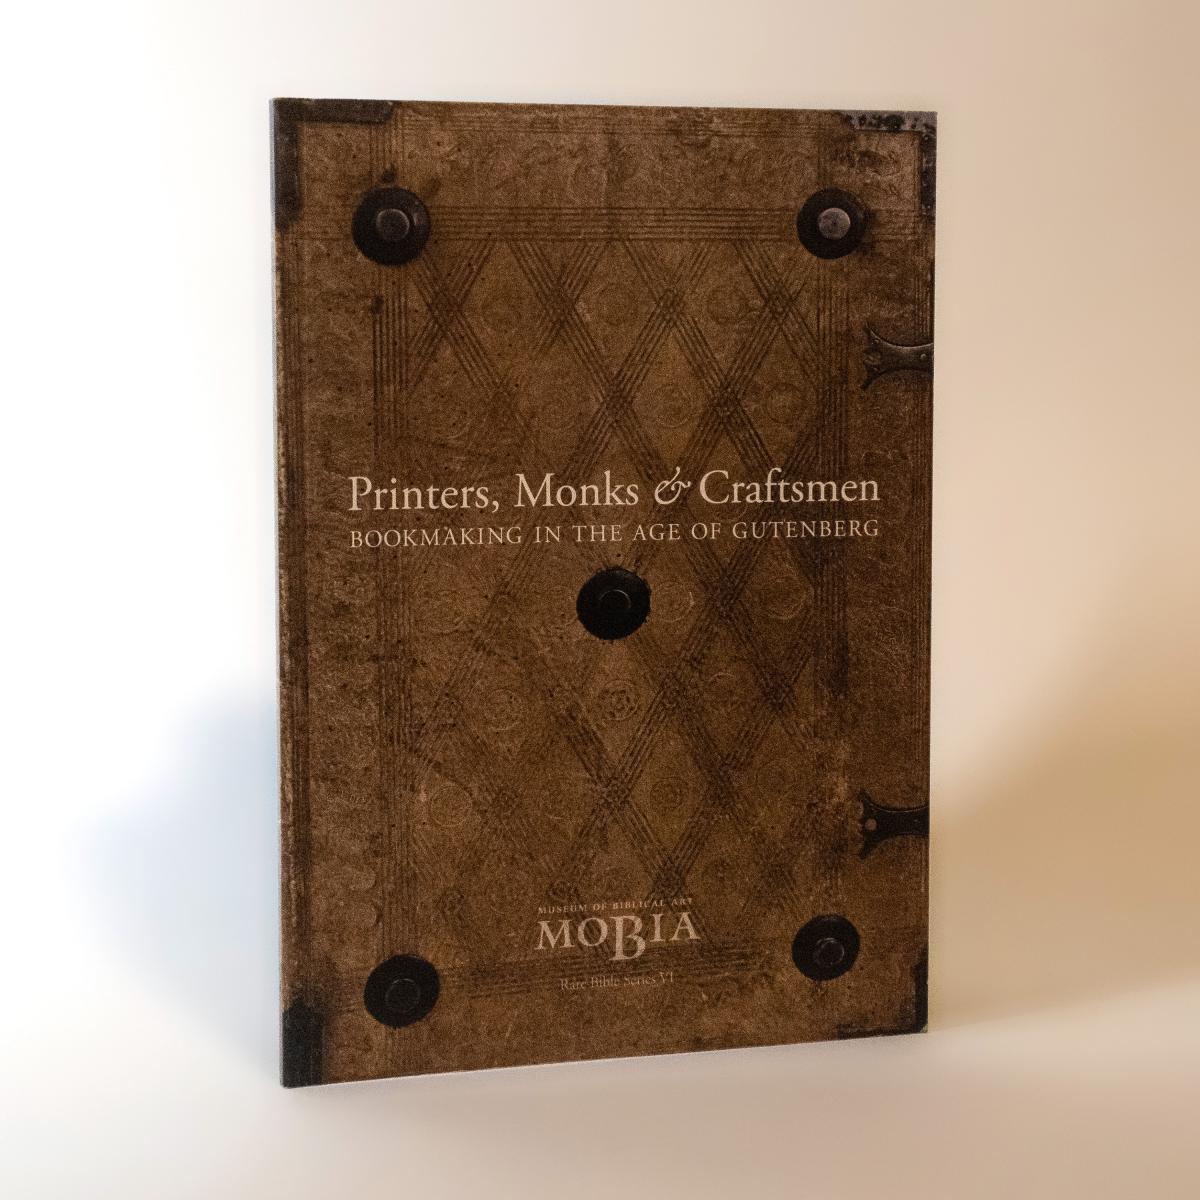 Libro de mesa de café para impresores, monjes y artesanos.